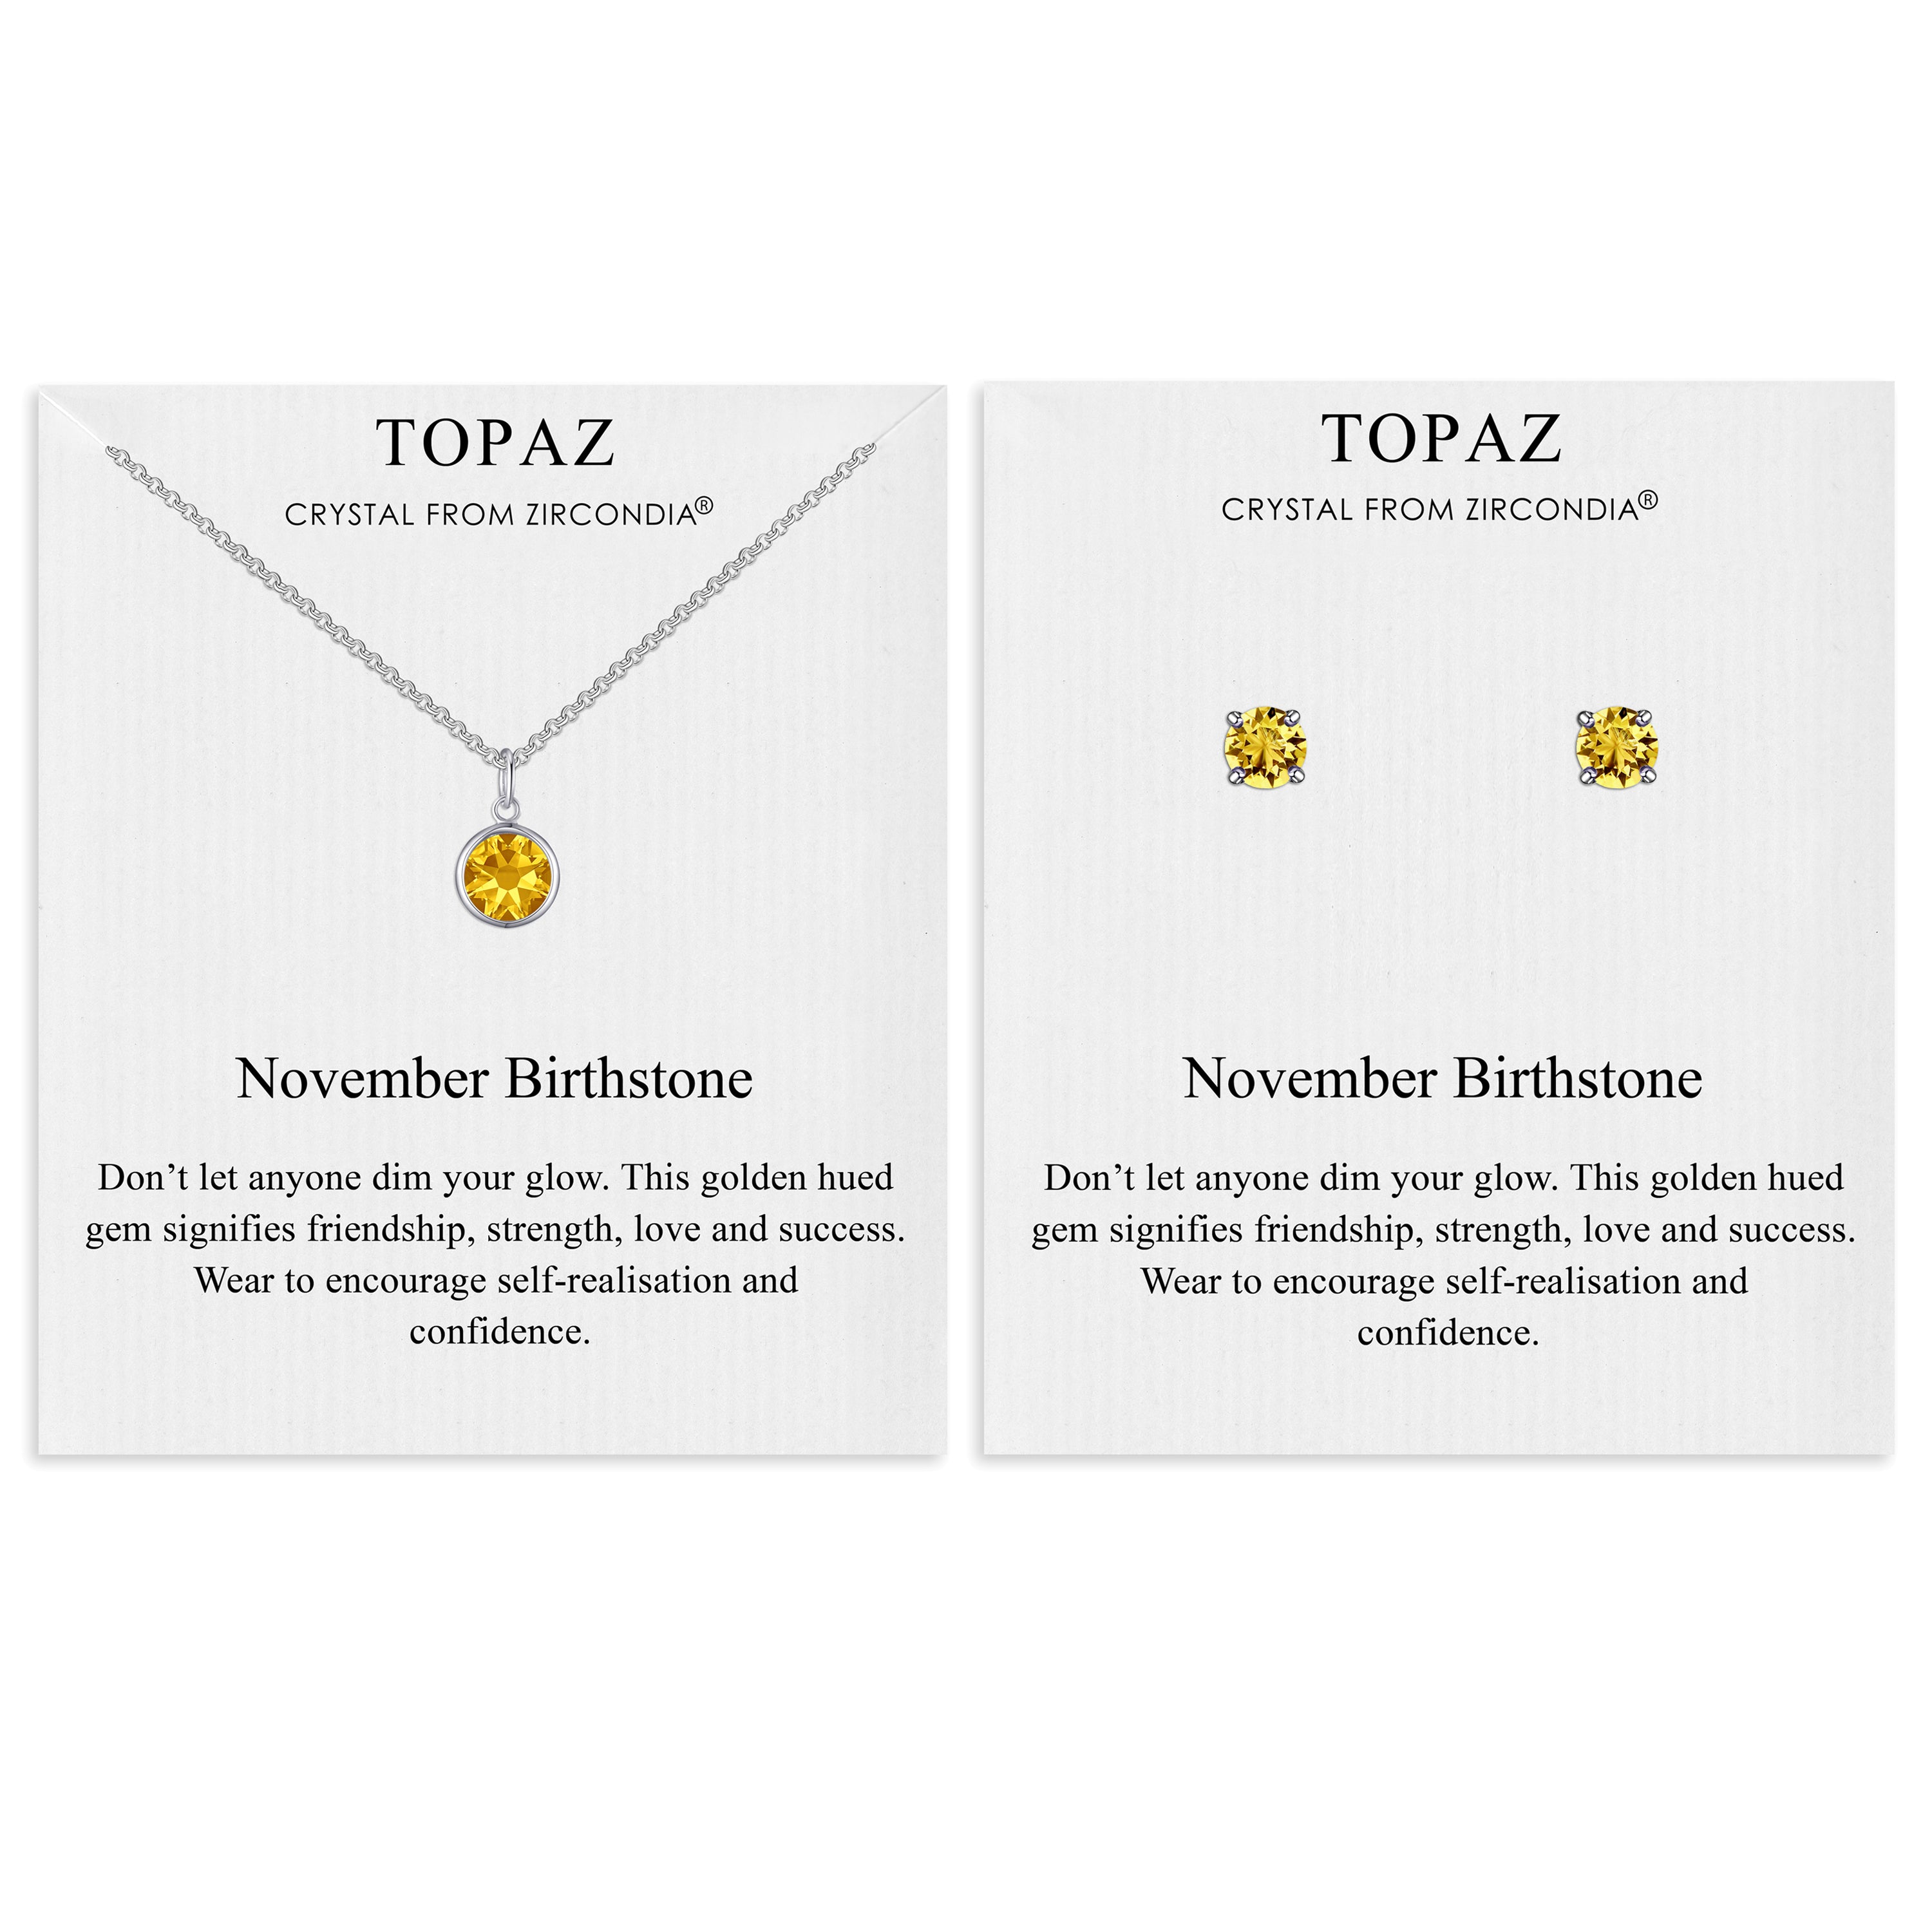 November (Topaz) Birthstone Necklace & Earrings Set Created with Zircondia® Crystals by Philip Jones Jewellery